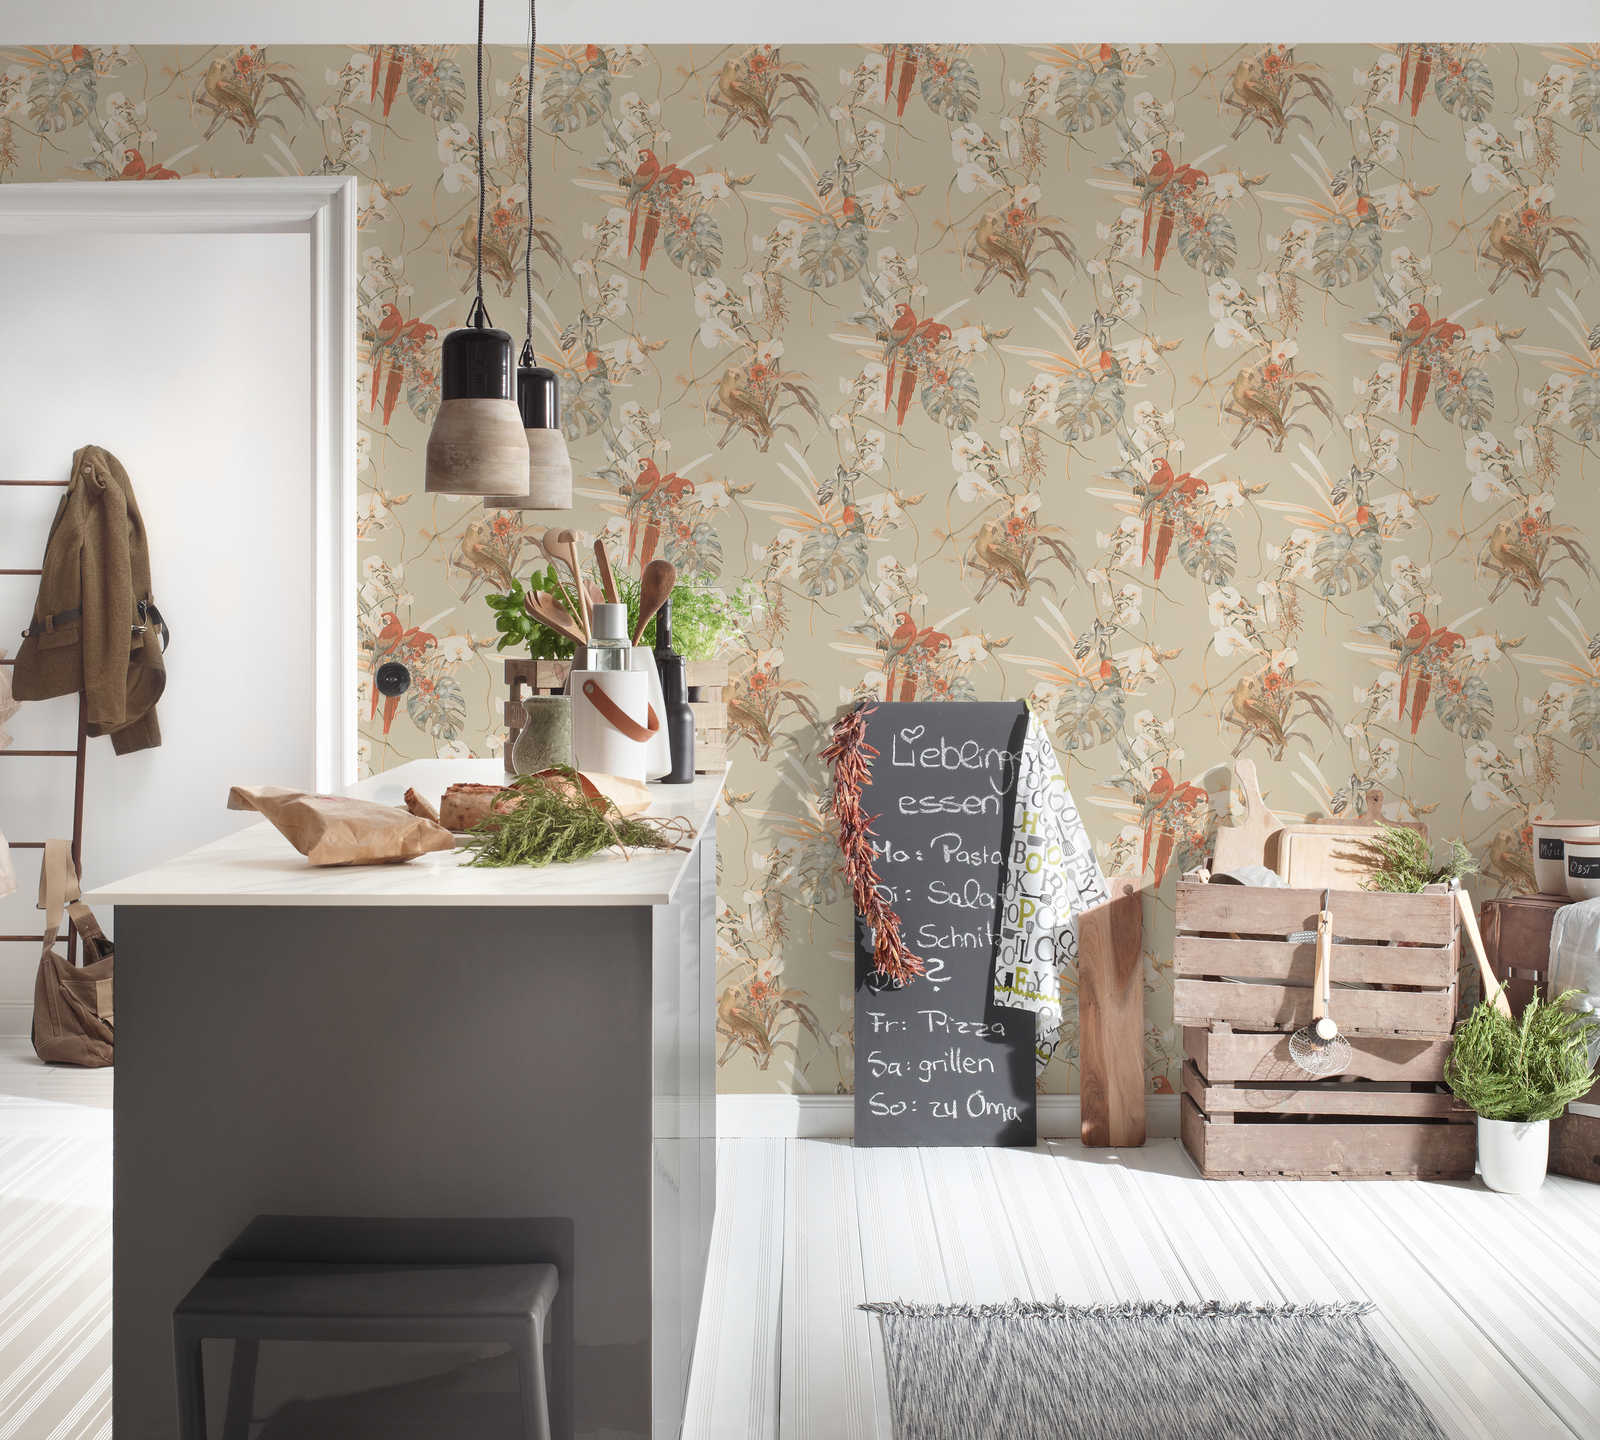             Wallpaper tropical design, parrot & exotic flowers - beige, brown
        